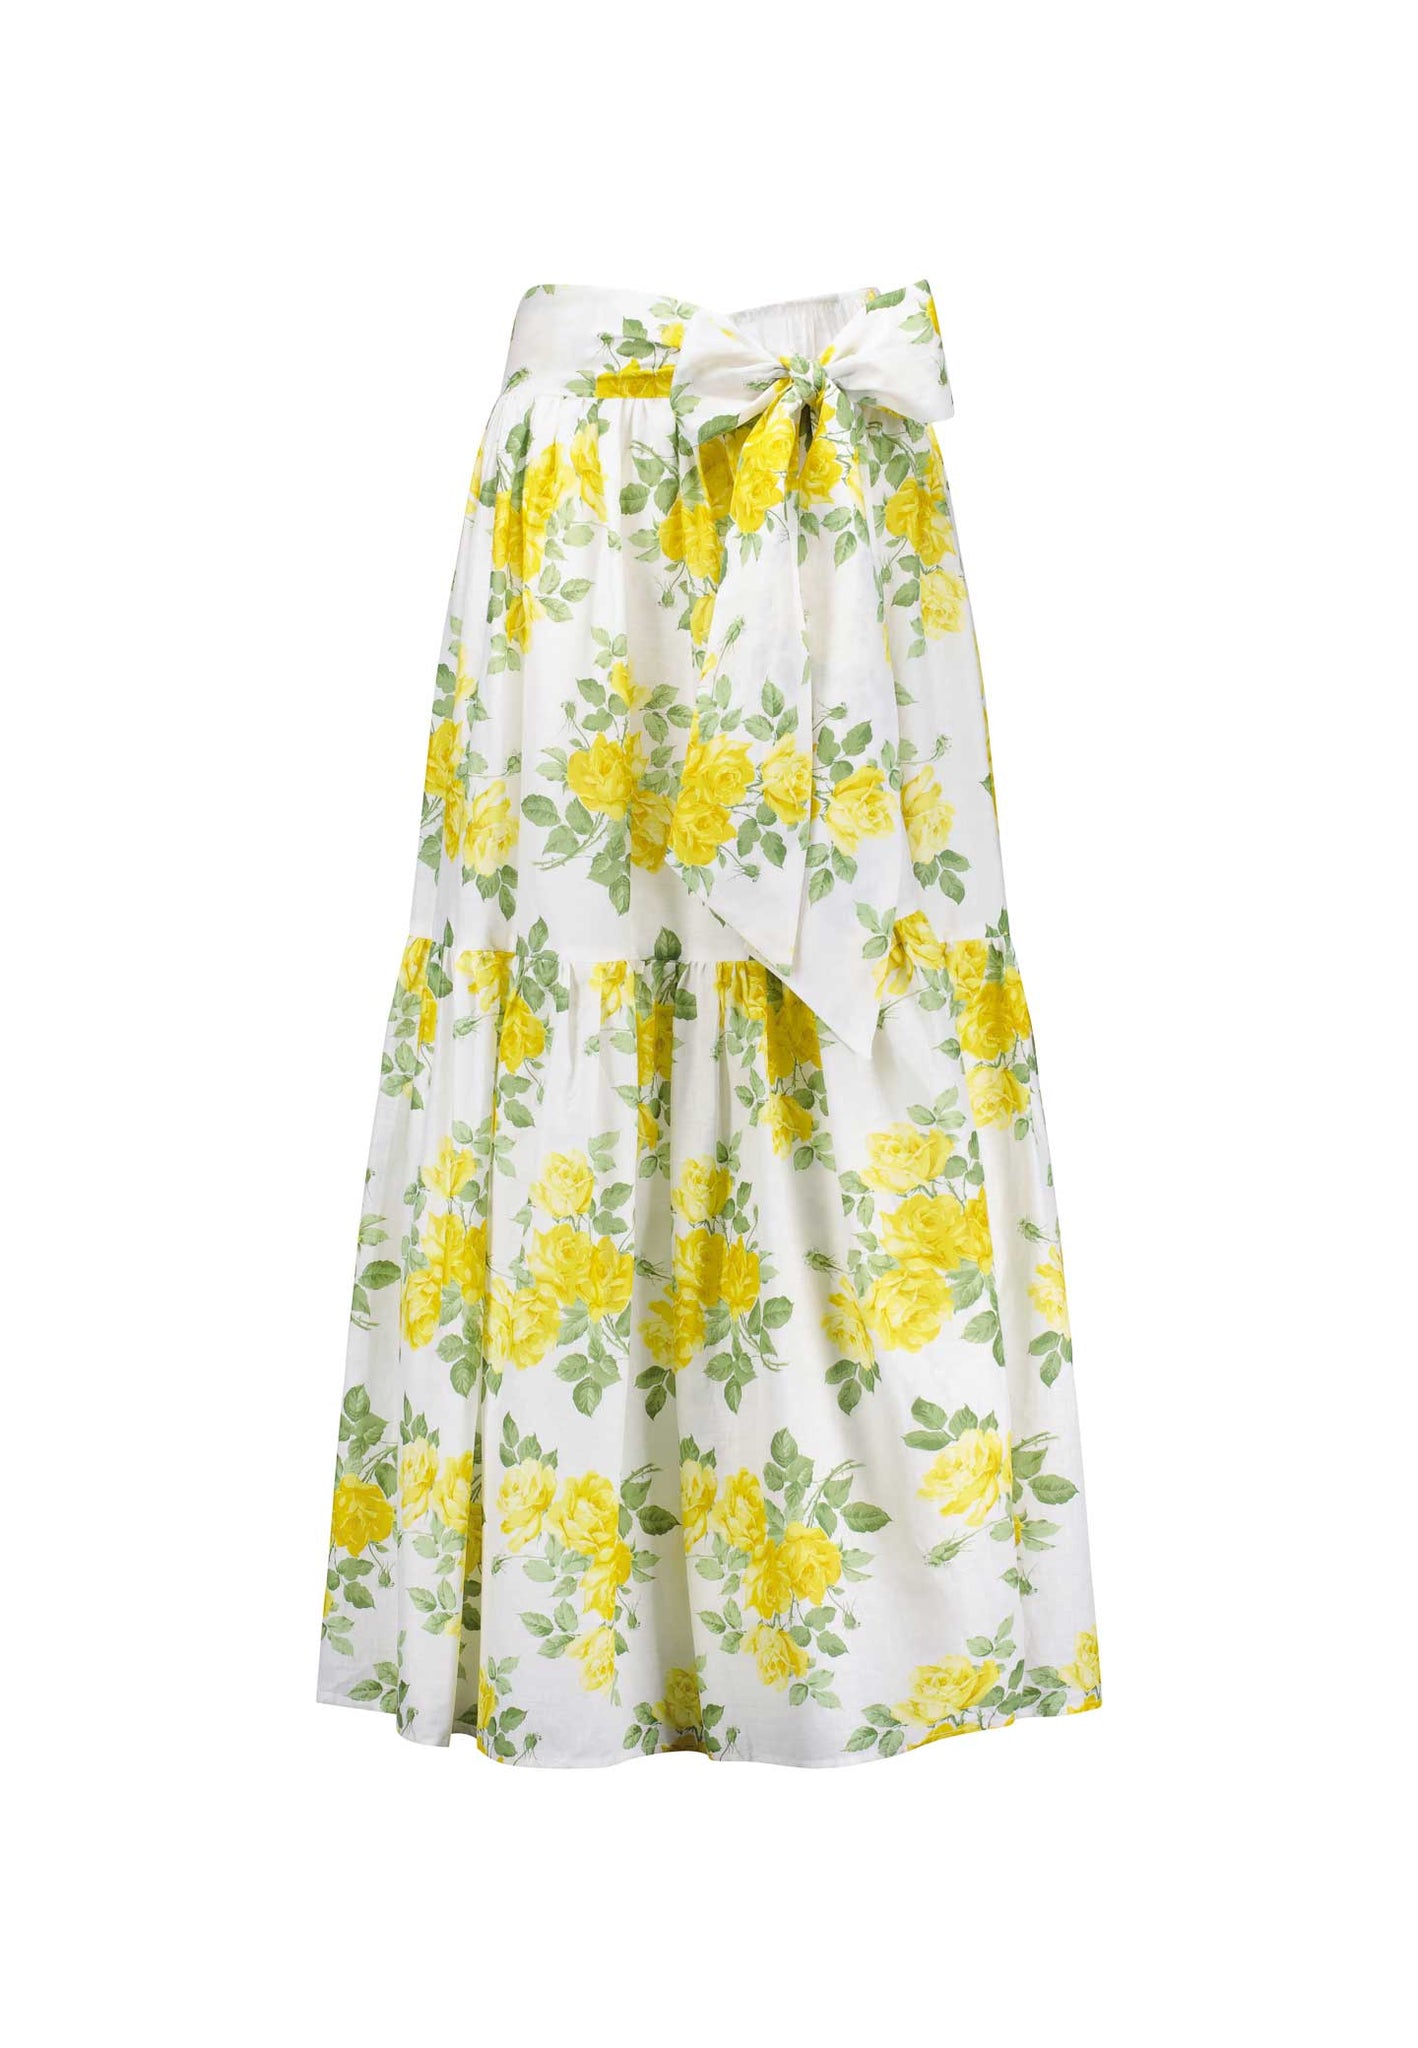 Caitlin Crisp Still The One Skirt Yellow Liberty Floral